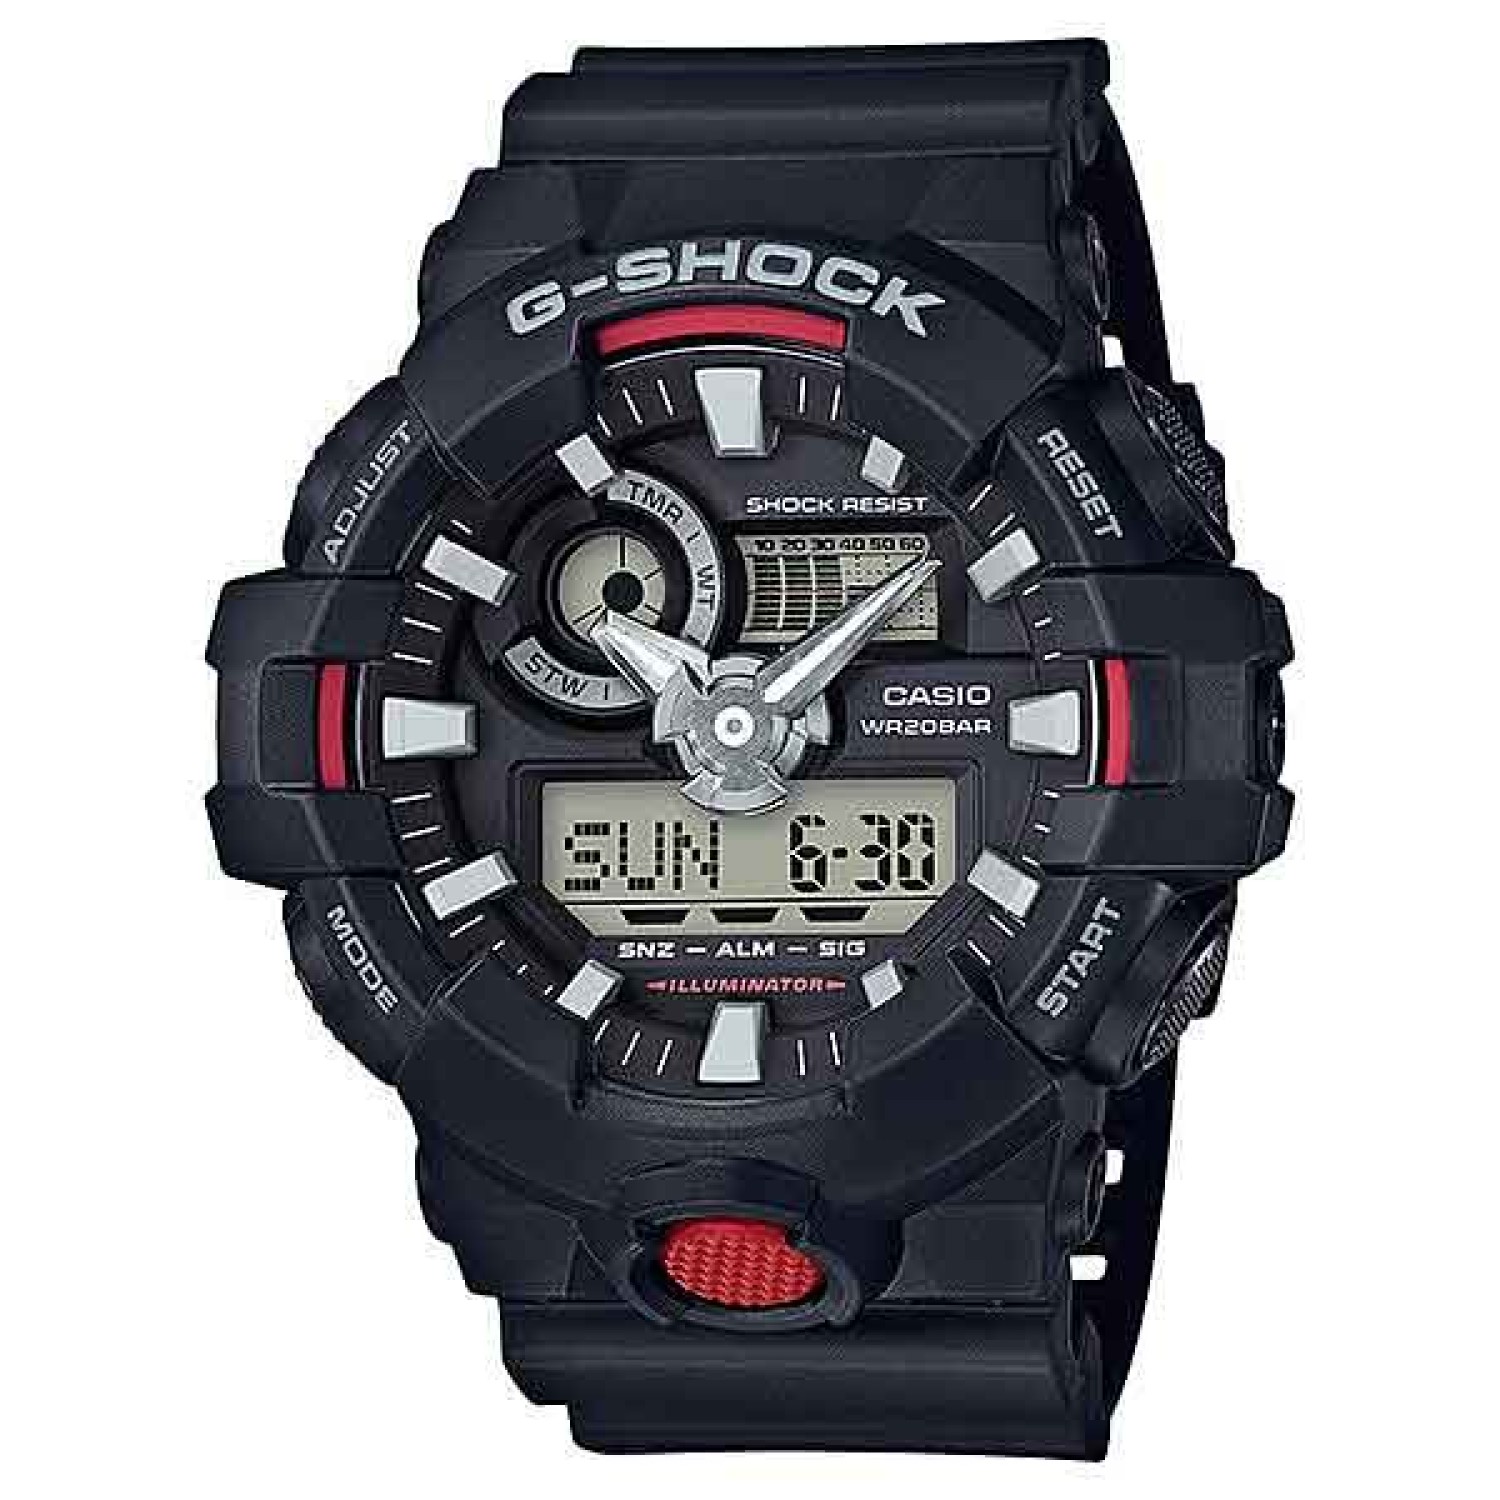 GA700-1A G-SHOCK  Analogue Digital Watch.casio watches nz sale $269.00